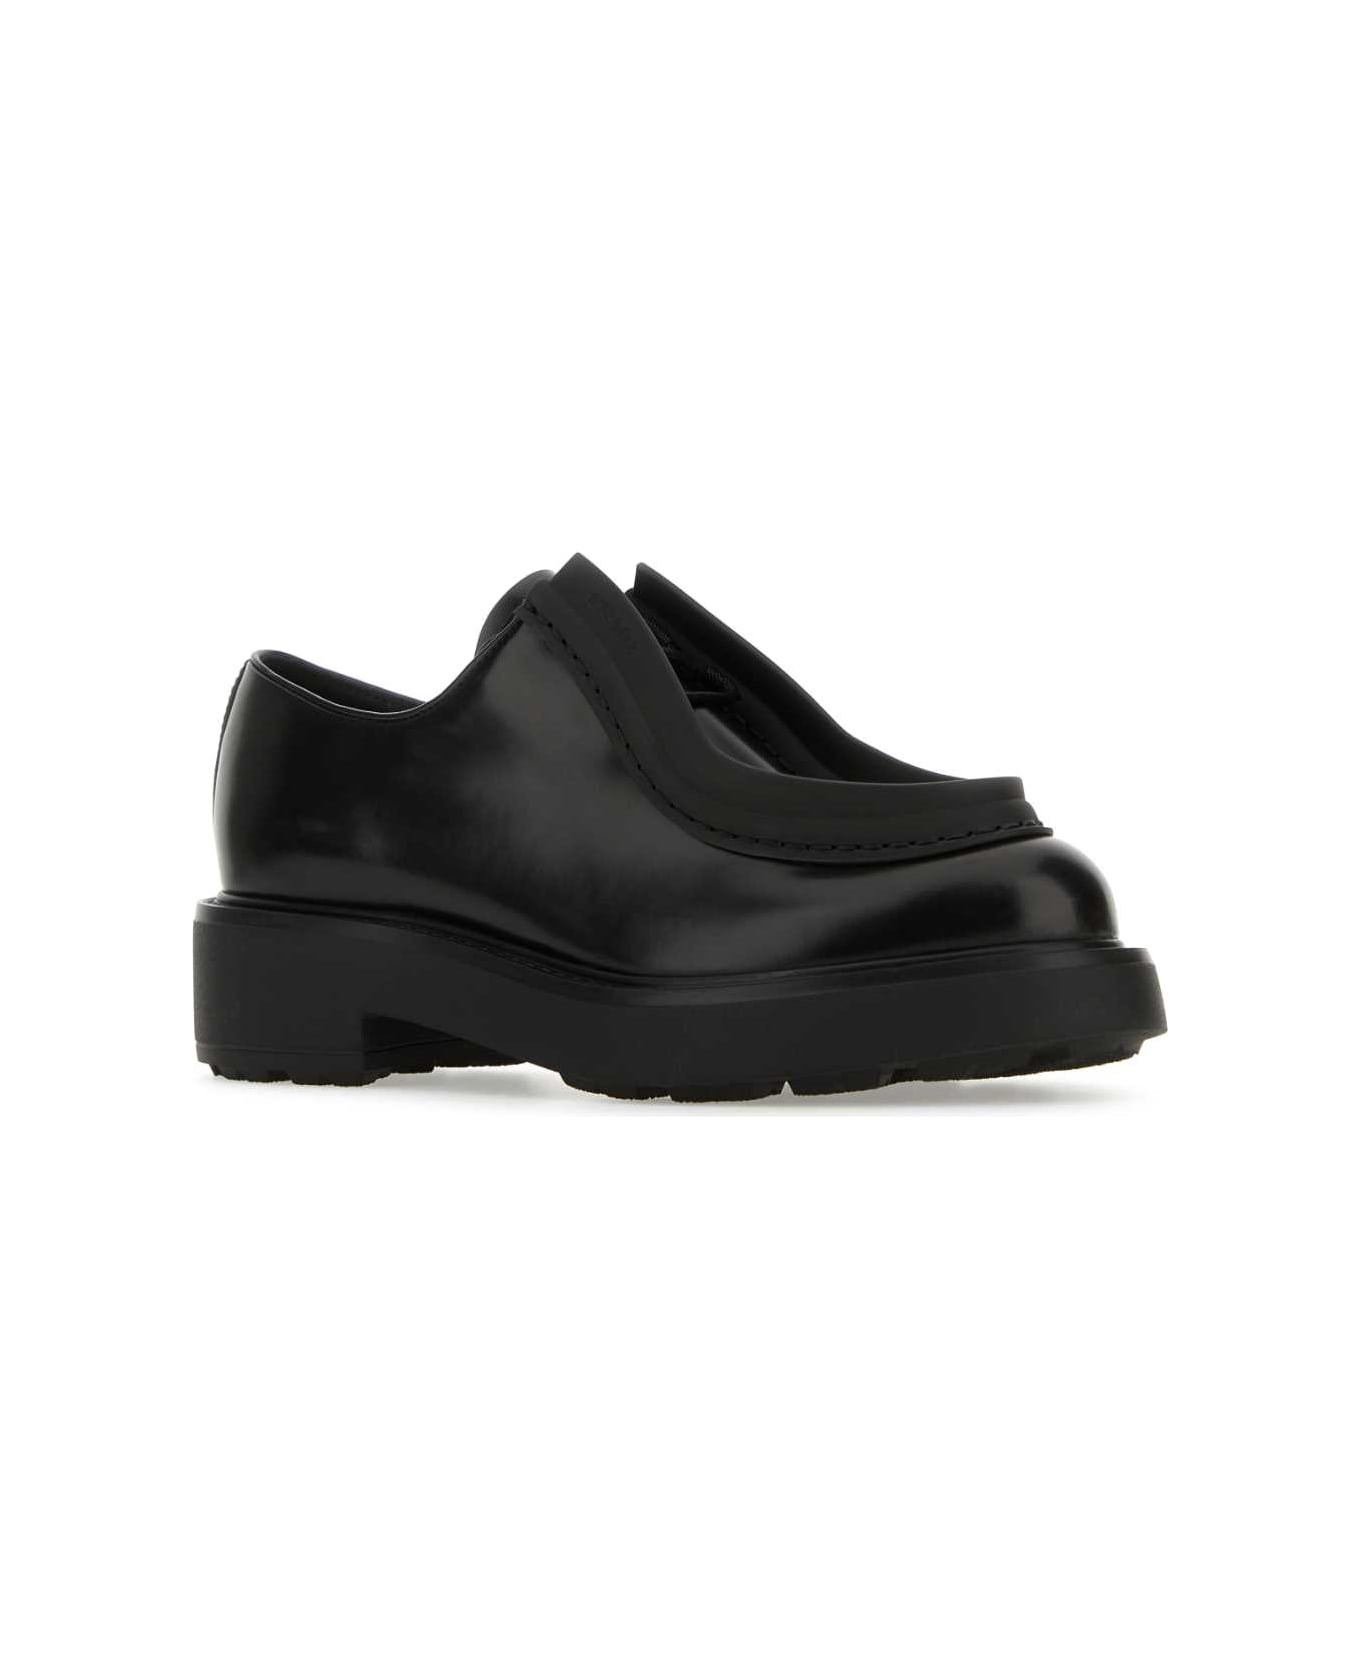 Prada Black Leather Lace-up Shoes - Black